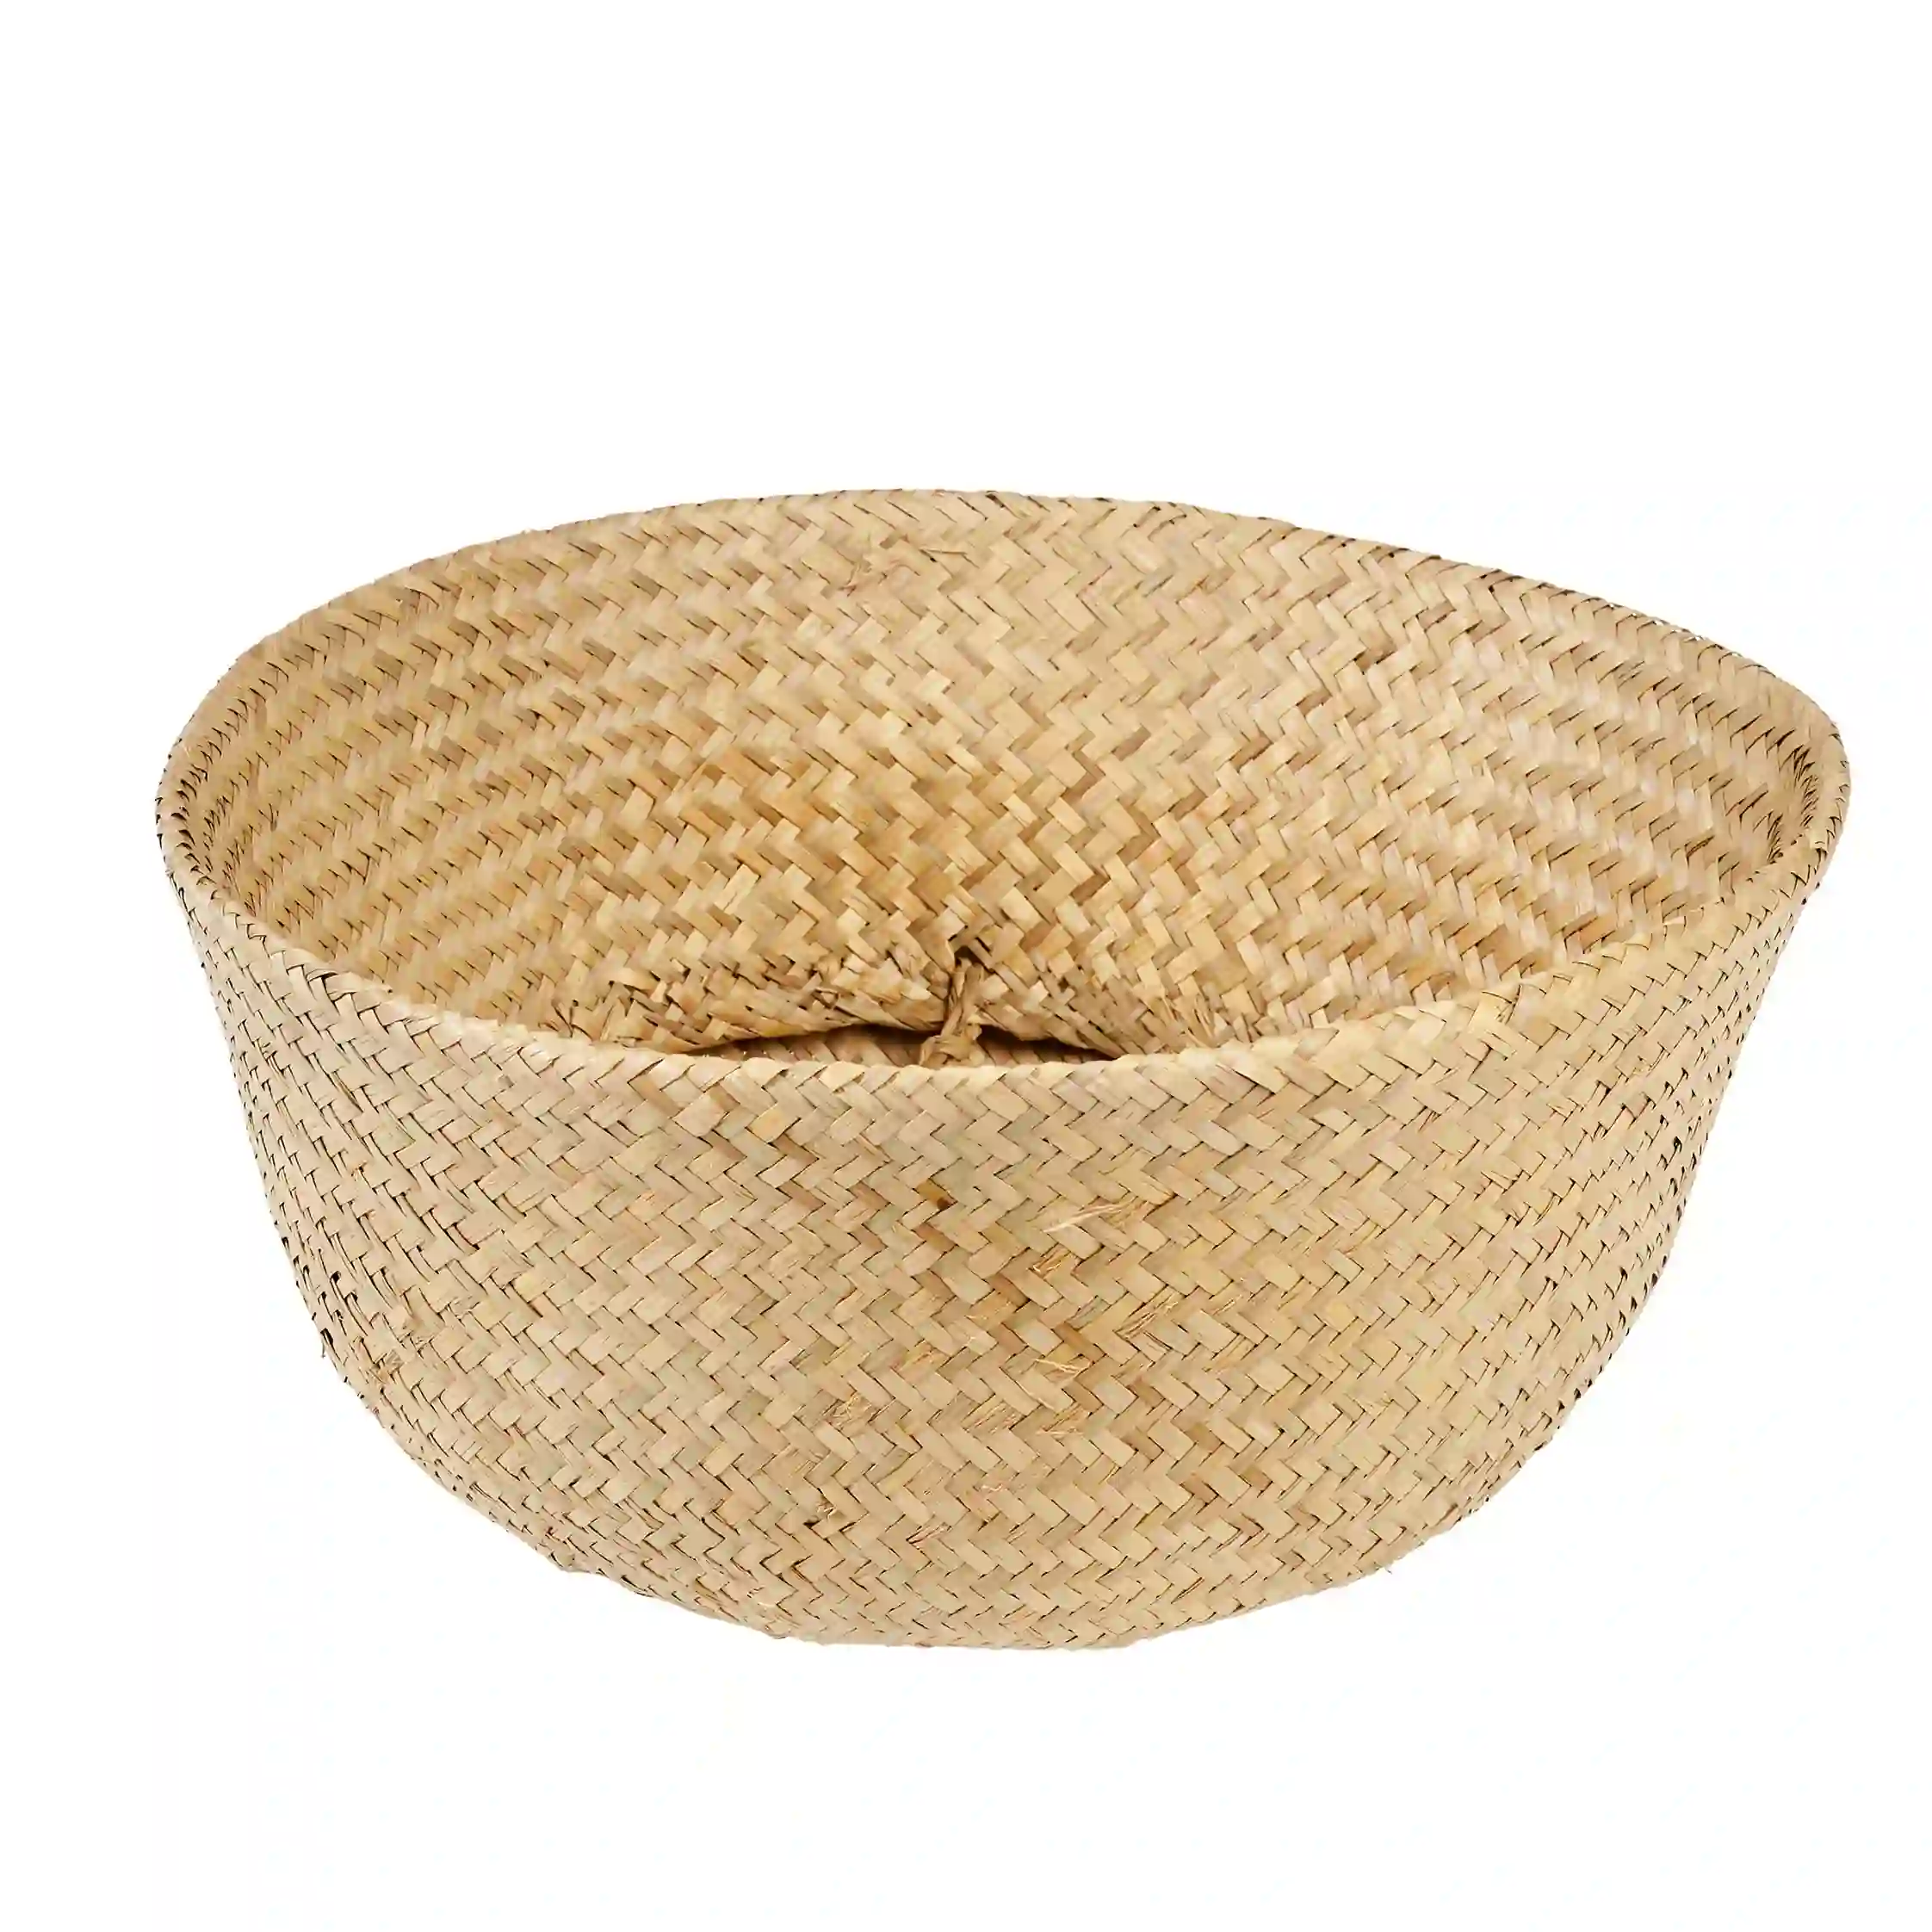 medium seagrass basket - natural